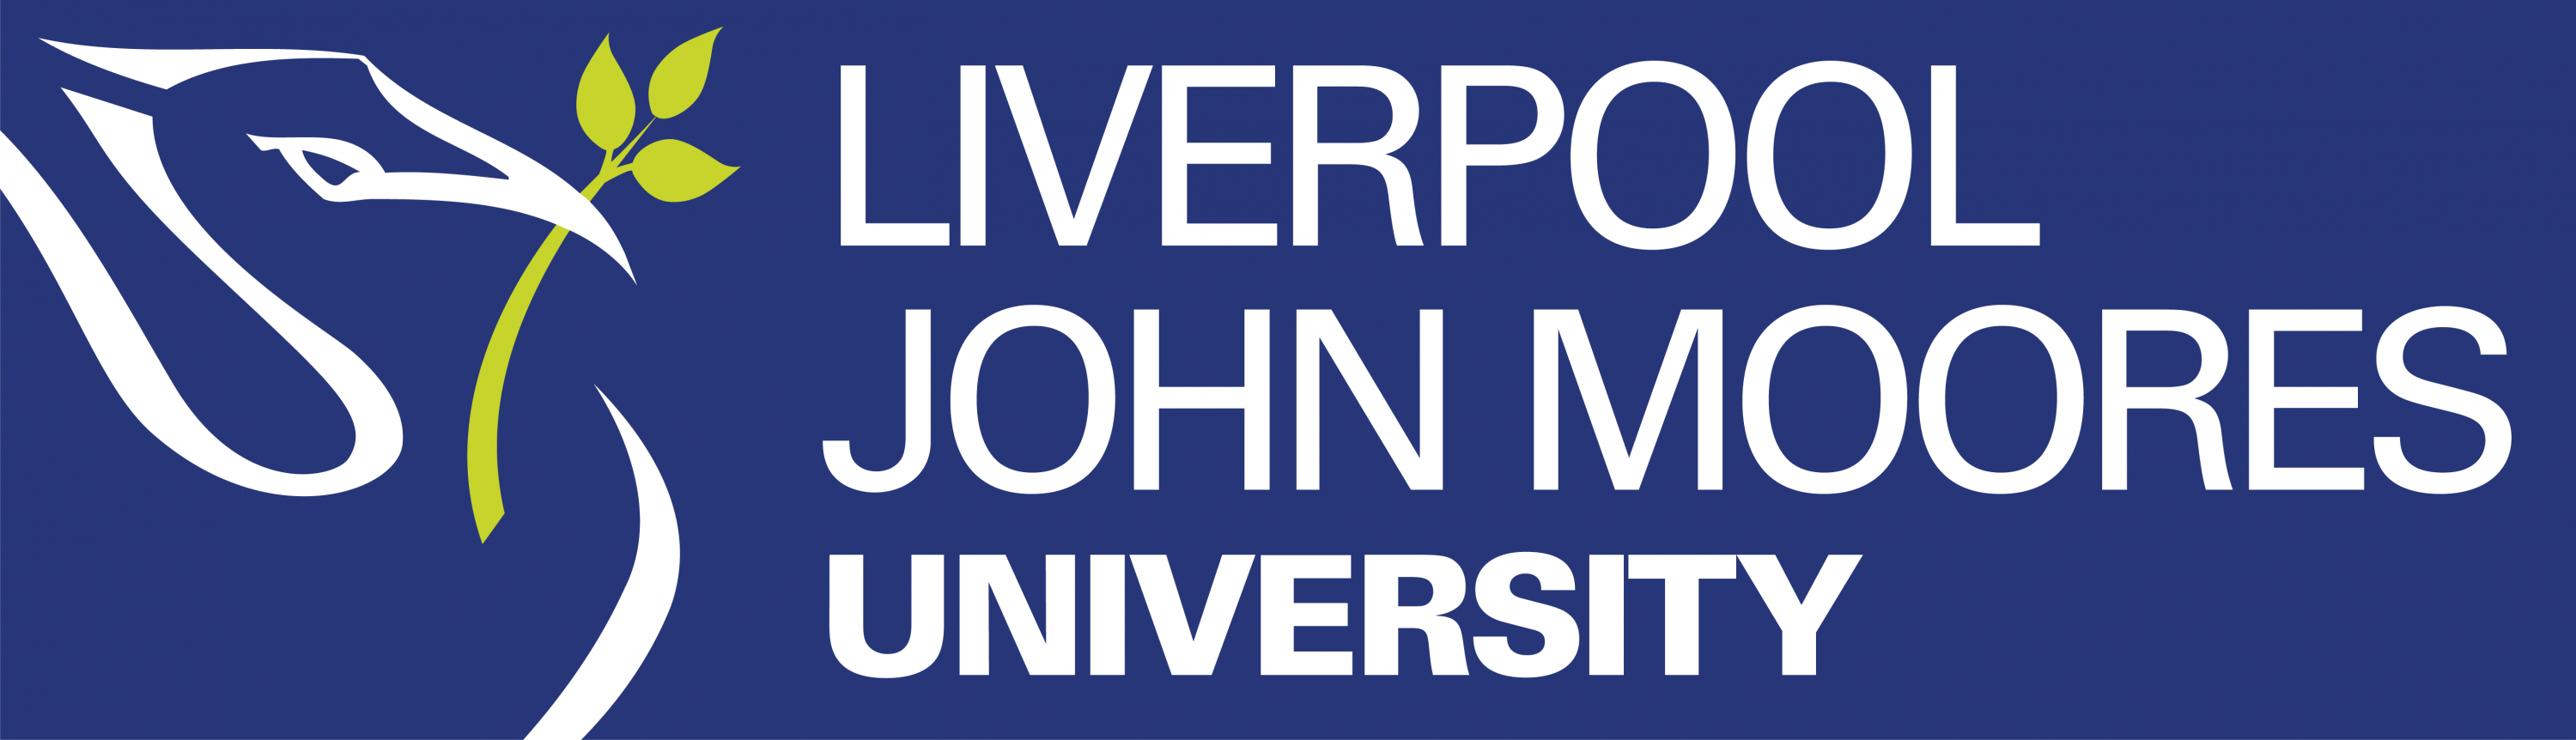 liverpool-john-moores-university